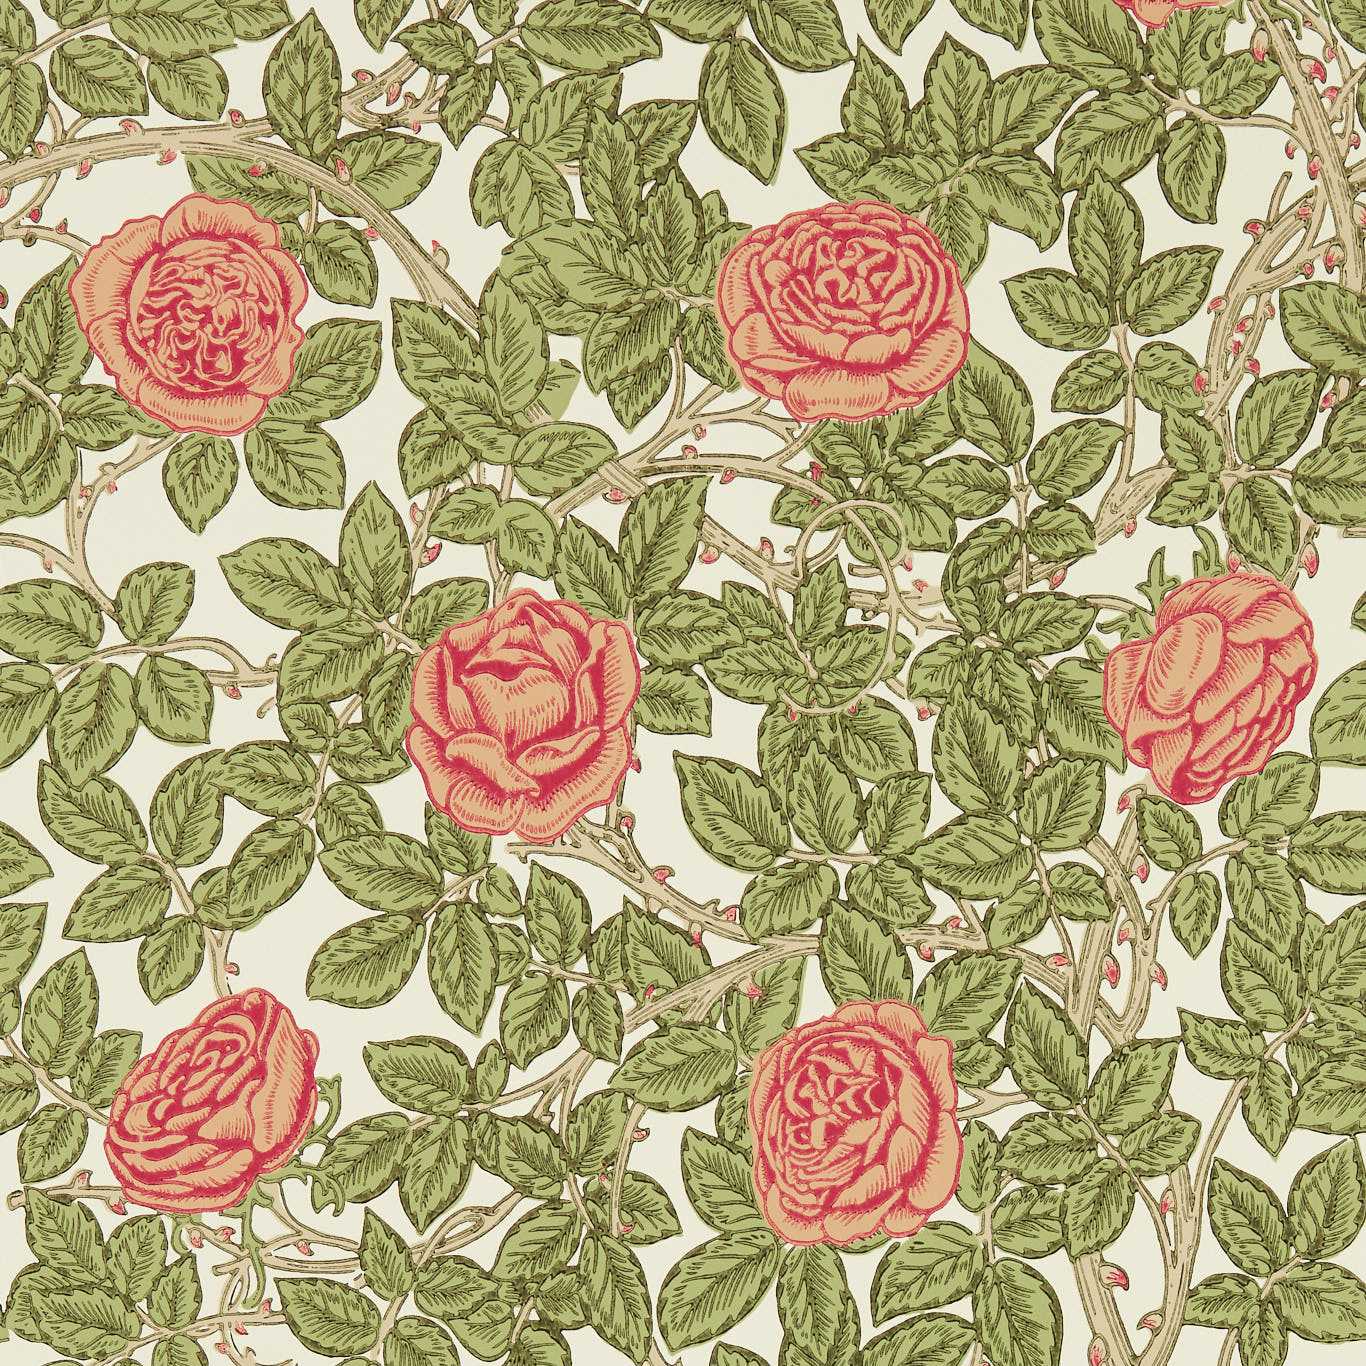 Rambling Rose Wallpaper - Twining Vine - MEWW217207 - Morris & Co - Emmery Walkers - Morris Wallpaper